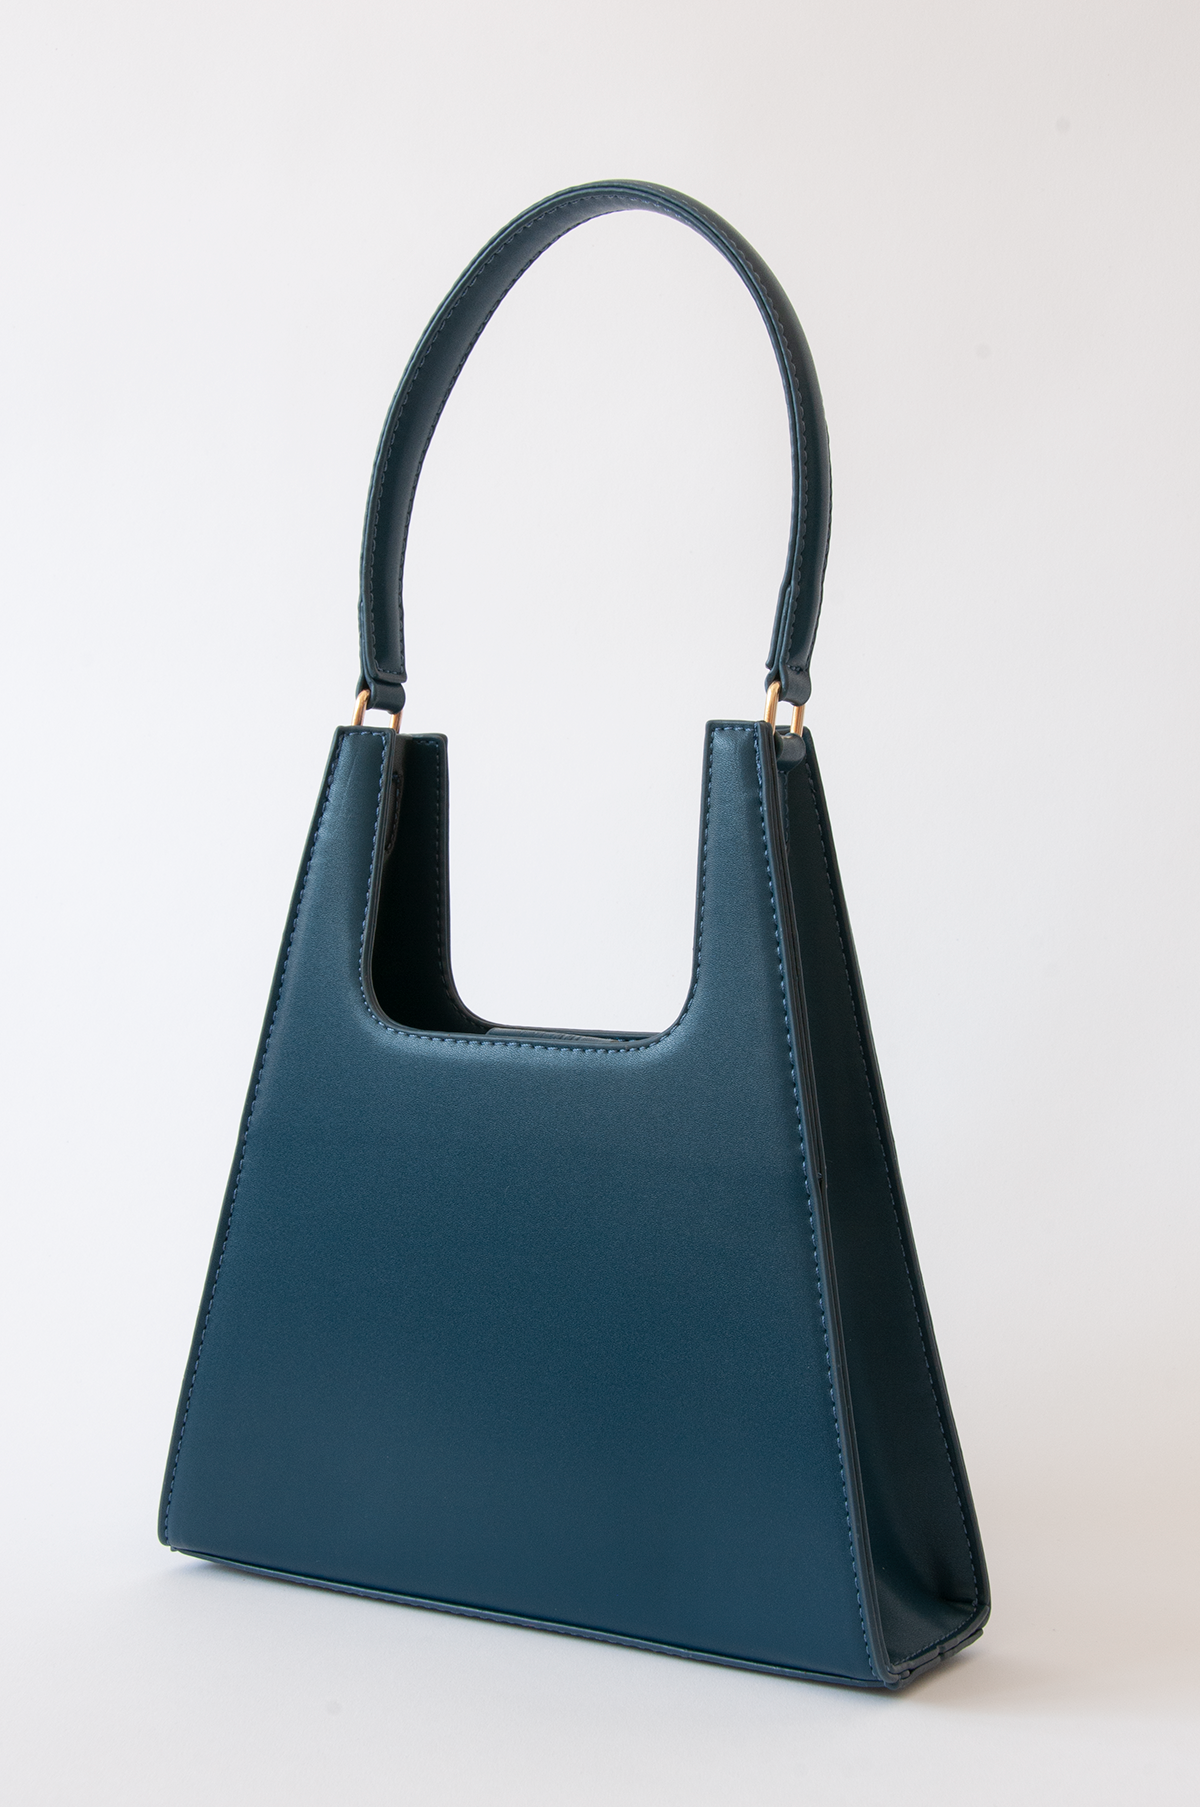 Jiyo Navy Bag - Women's Handbag - Shoulder Bag